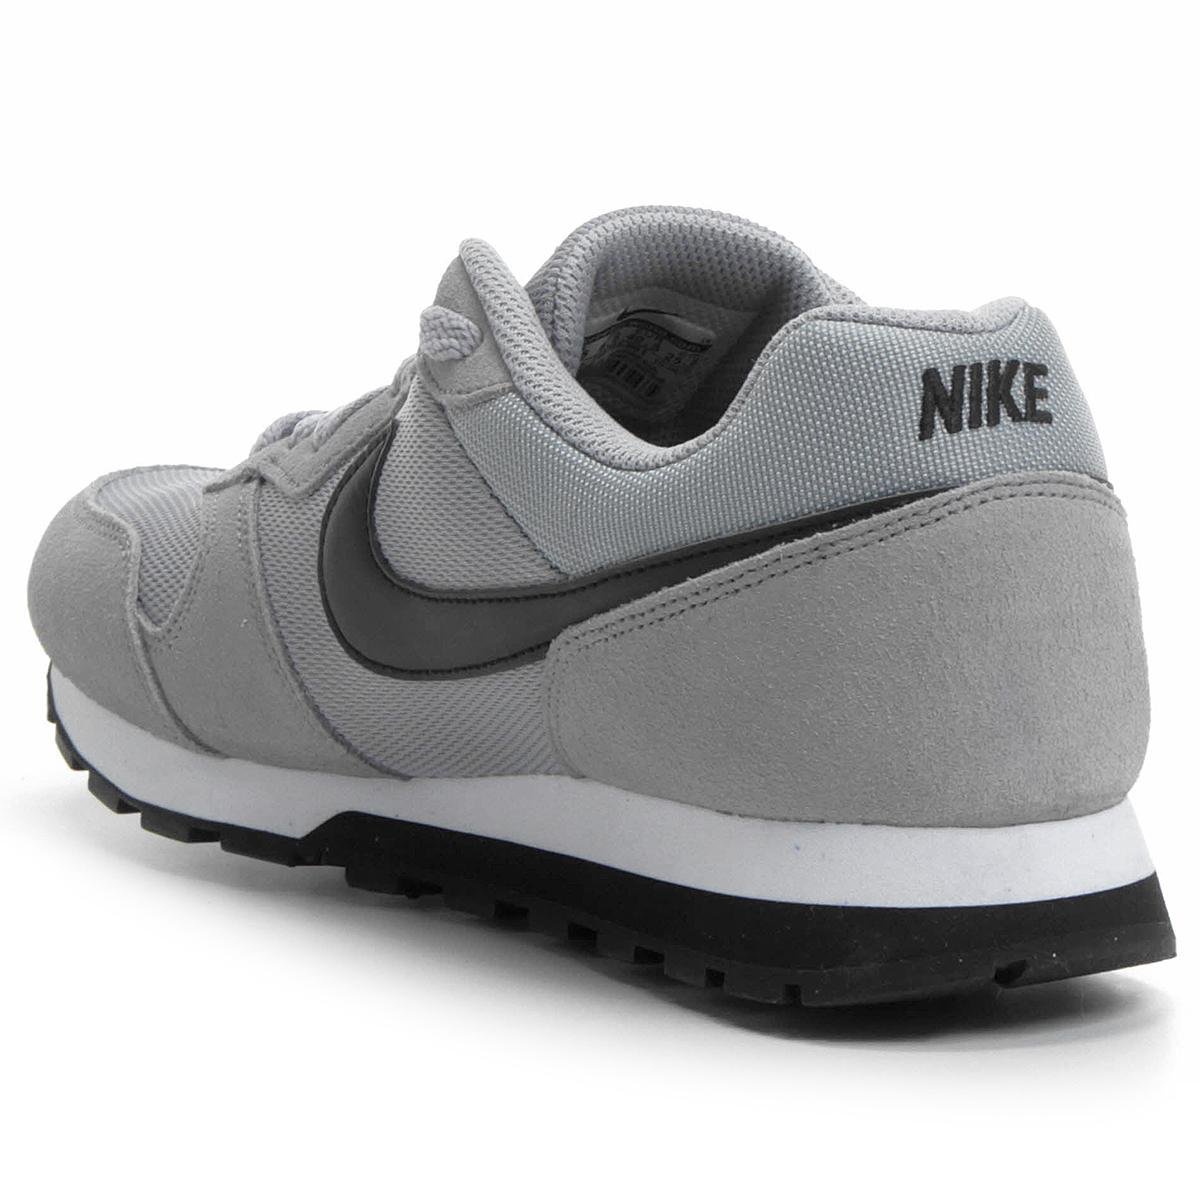 Nike Md Runner 2 M 749794-001 grey 